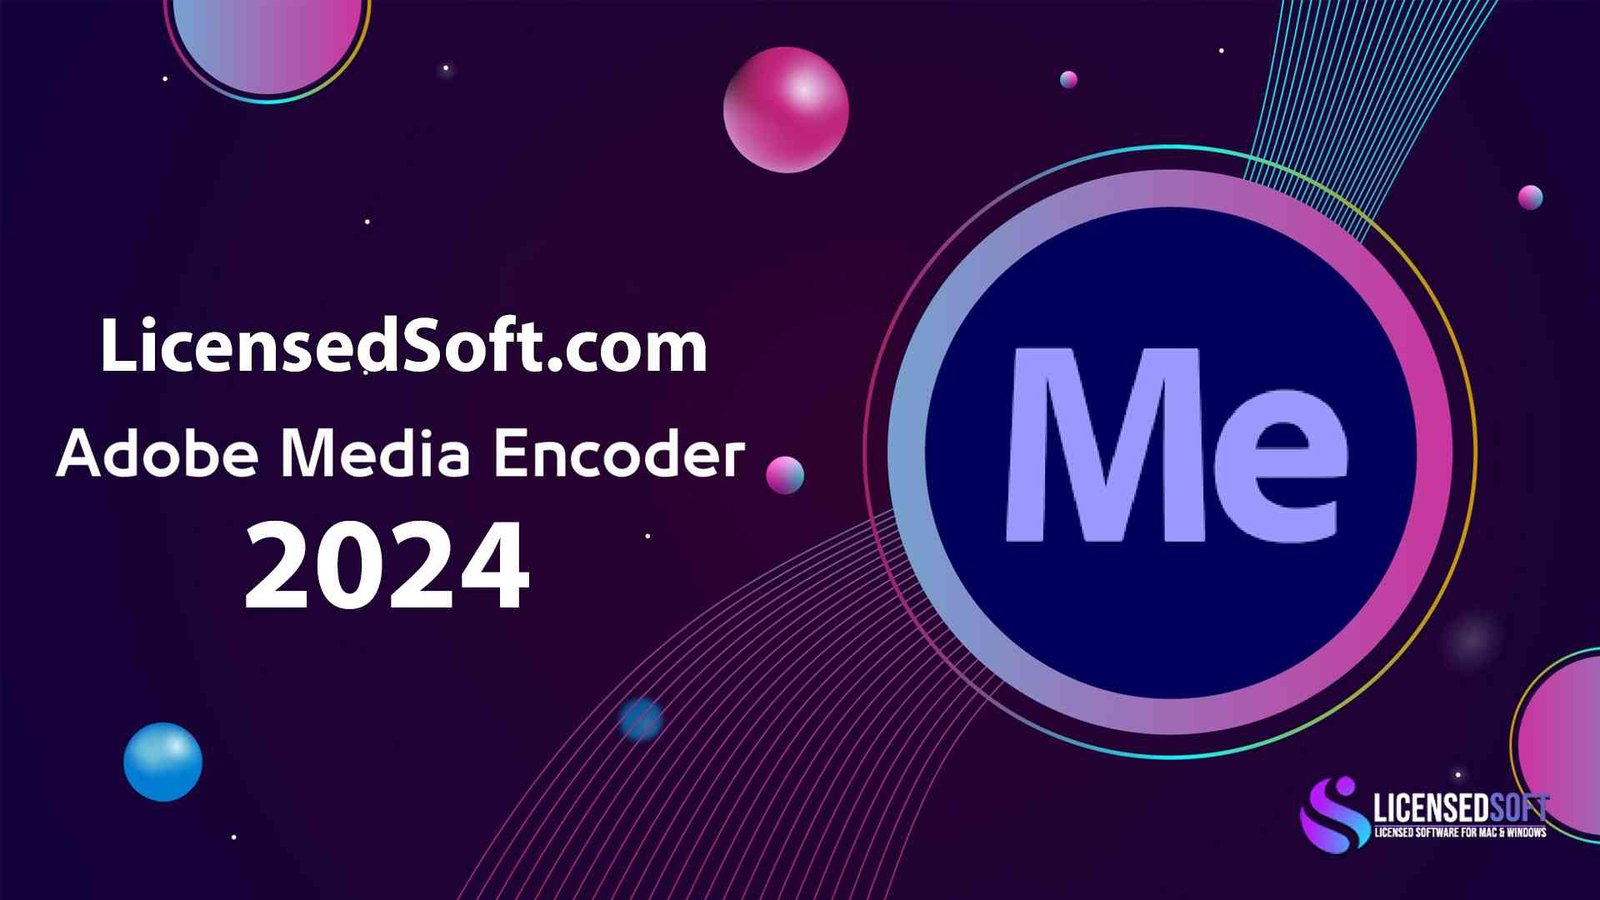 Adobe Media Encoder 2024 Full Version v24 By LicensedSoft